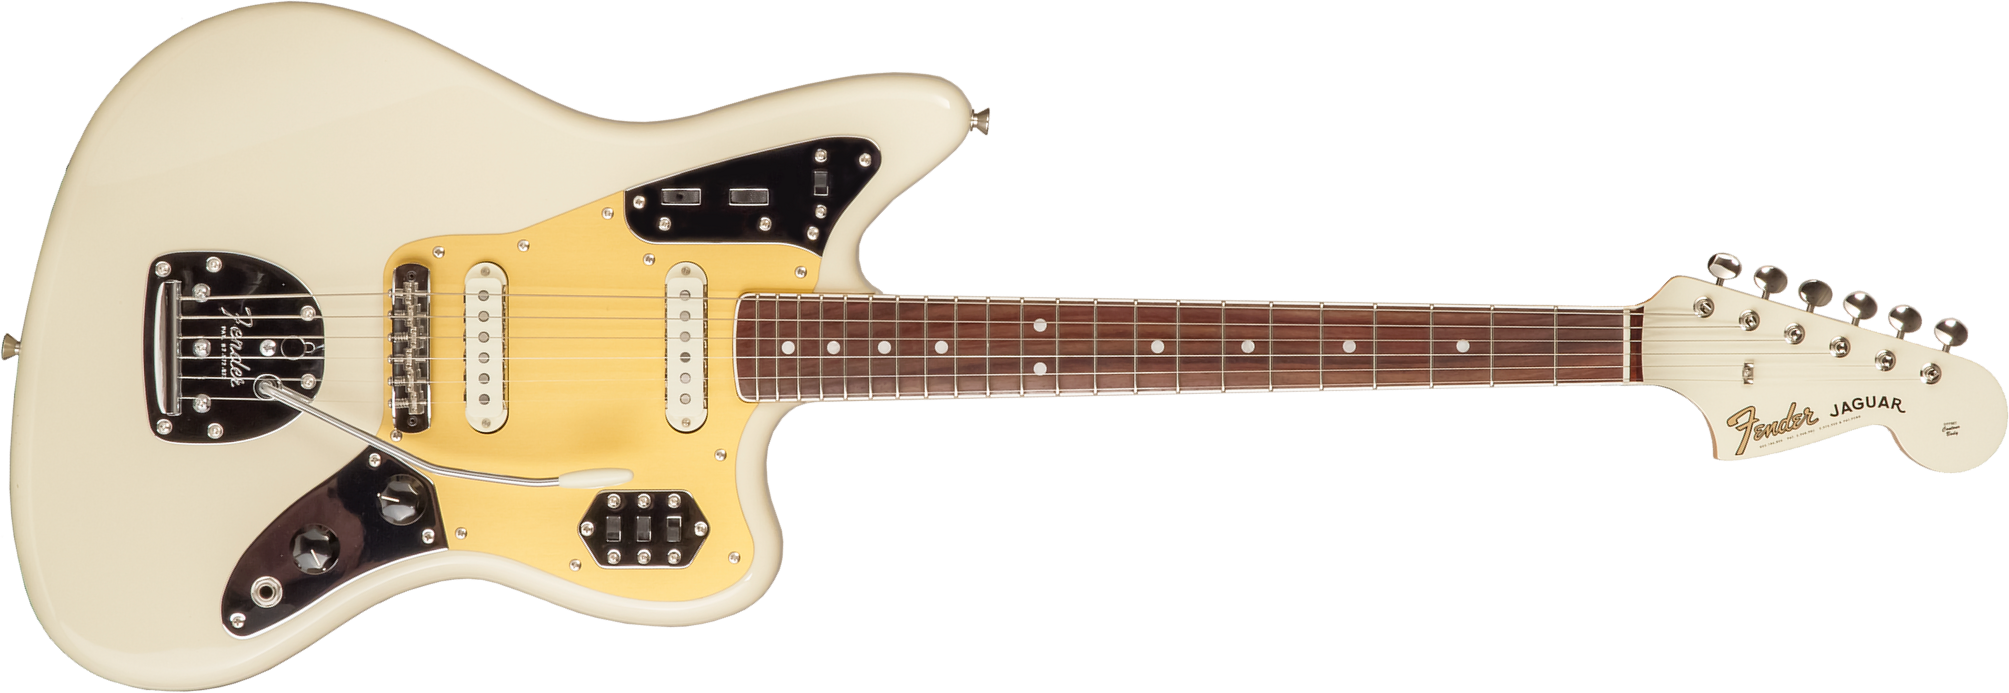 Fender Jaguar Traditional Ii 60s Japan 2s Trem Rw - Olympic White - Guitarra electrica retro rock - Main picture